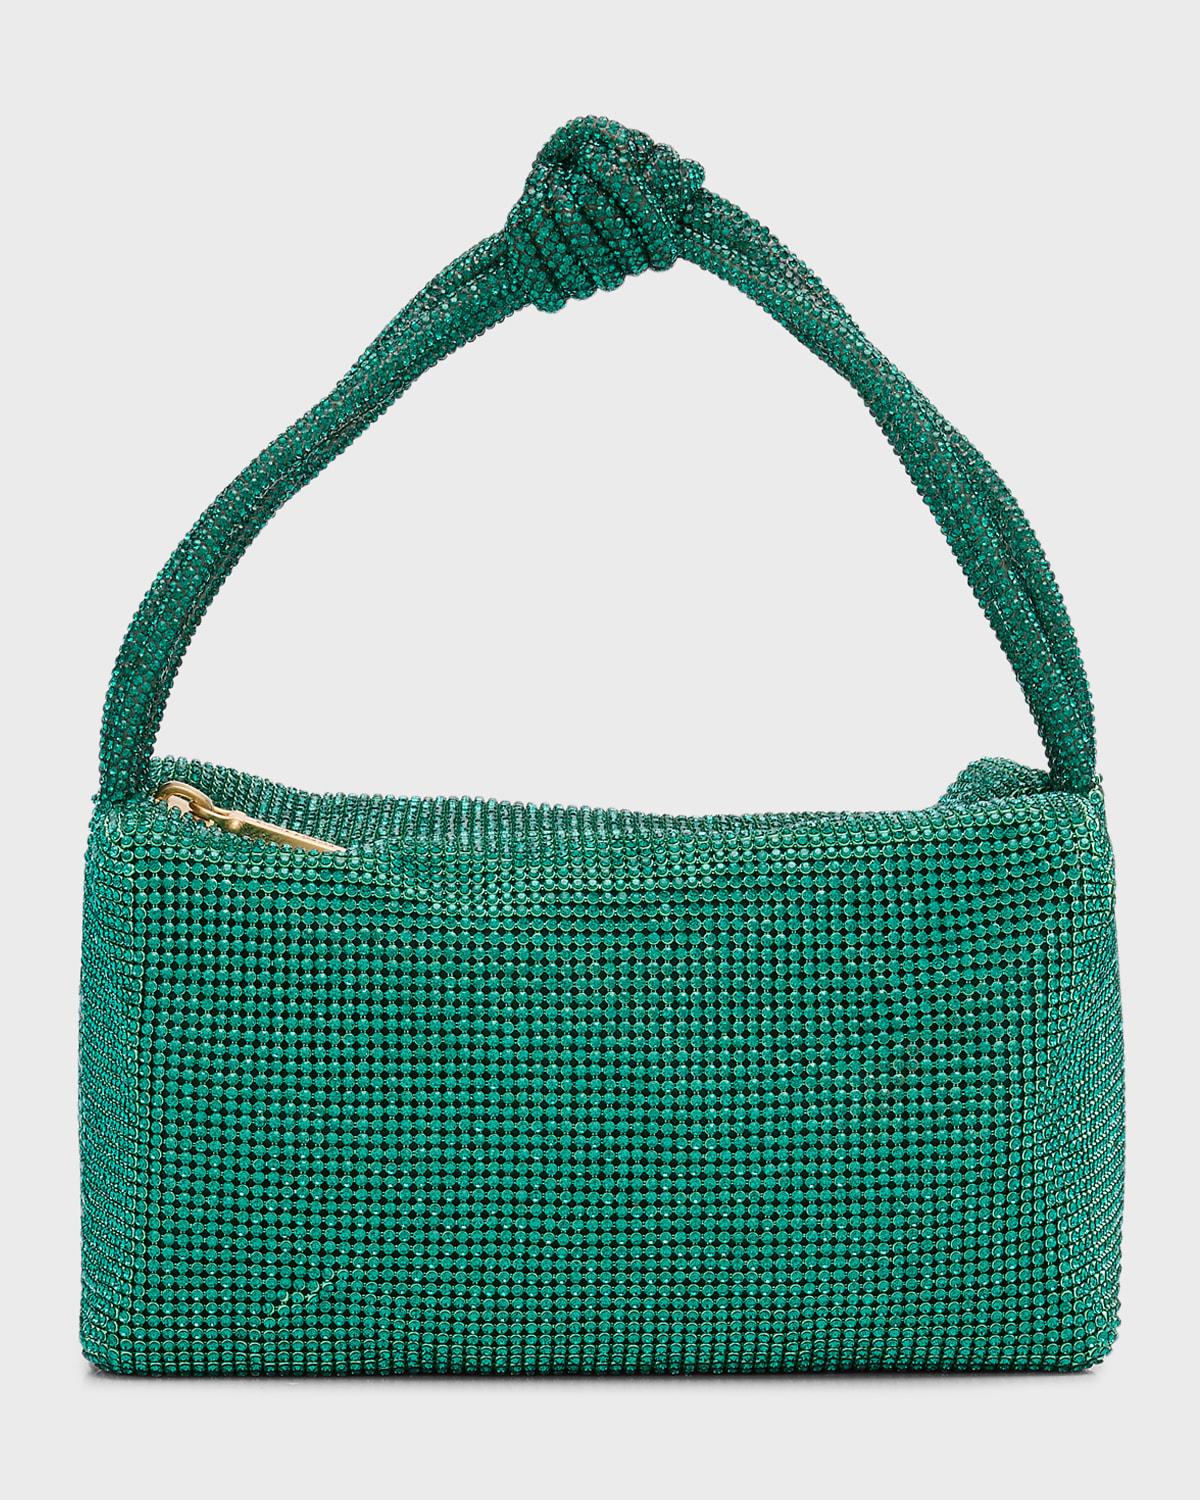 Cult Gaia Sienna Mini Embellished Top-handle Bag in Green | Lyst